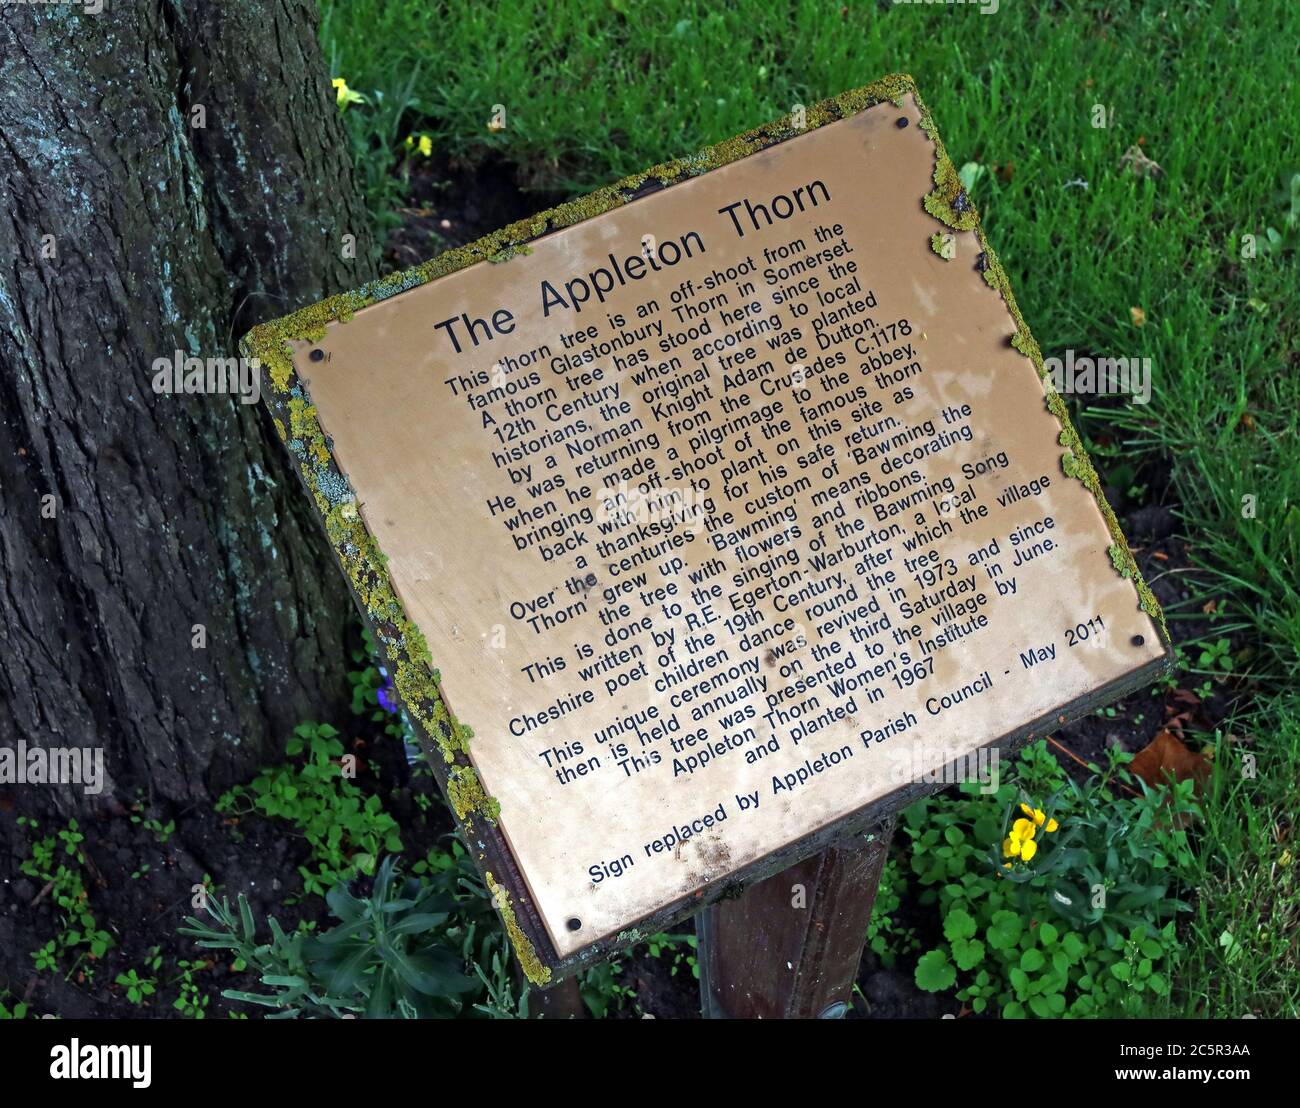 La espina de Appleton, historia del amanecer de la espina de Appleton, Thorn de Appleton, Warrington, Cheshire, Inglaterra, Reino Unido Foto de stock